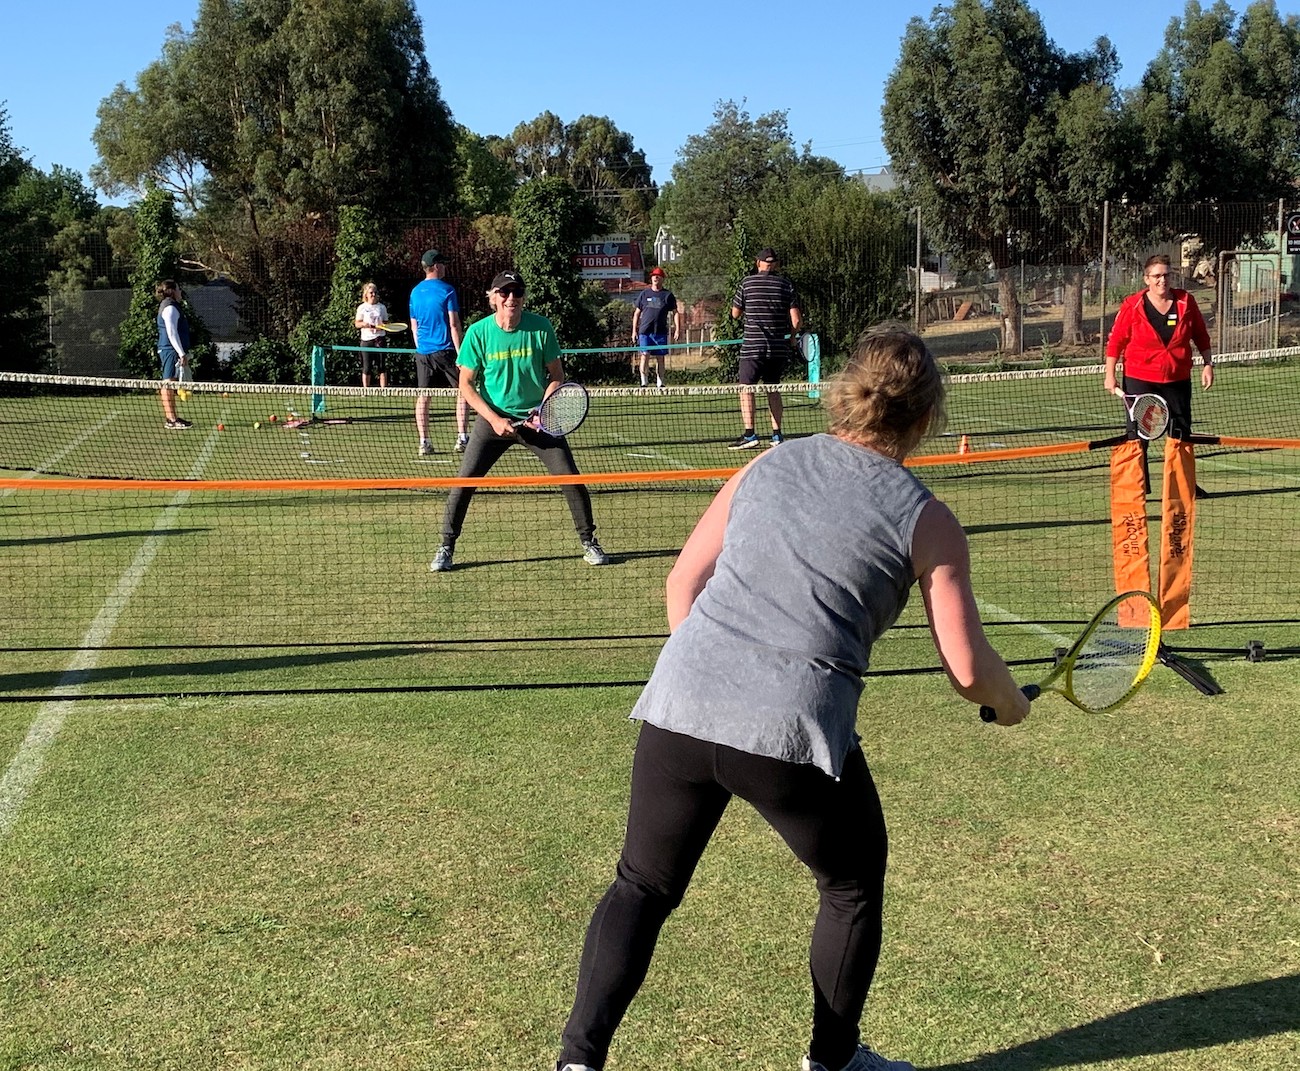 Jam-packed season for Daylesford Lawn Tennis Club